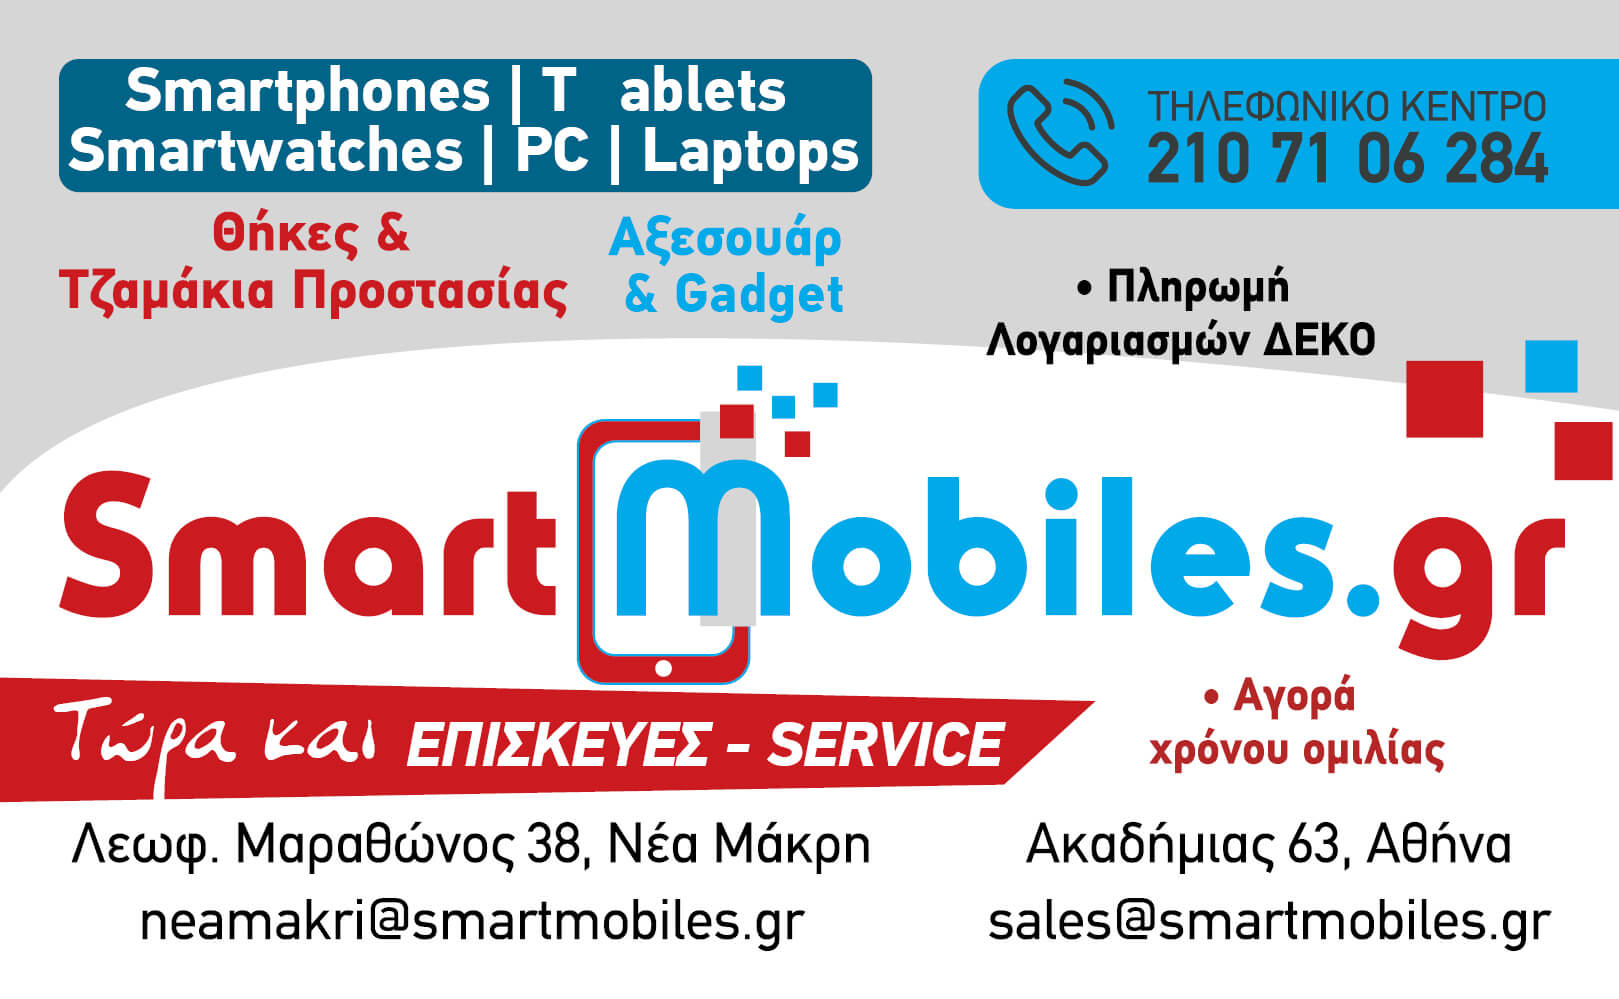 Smart mobiles